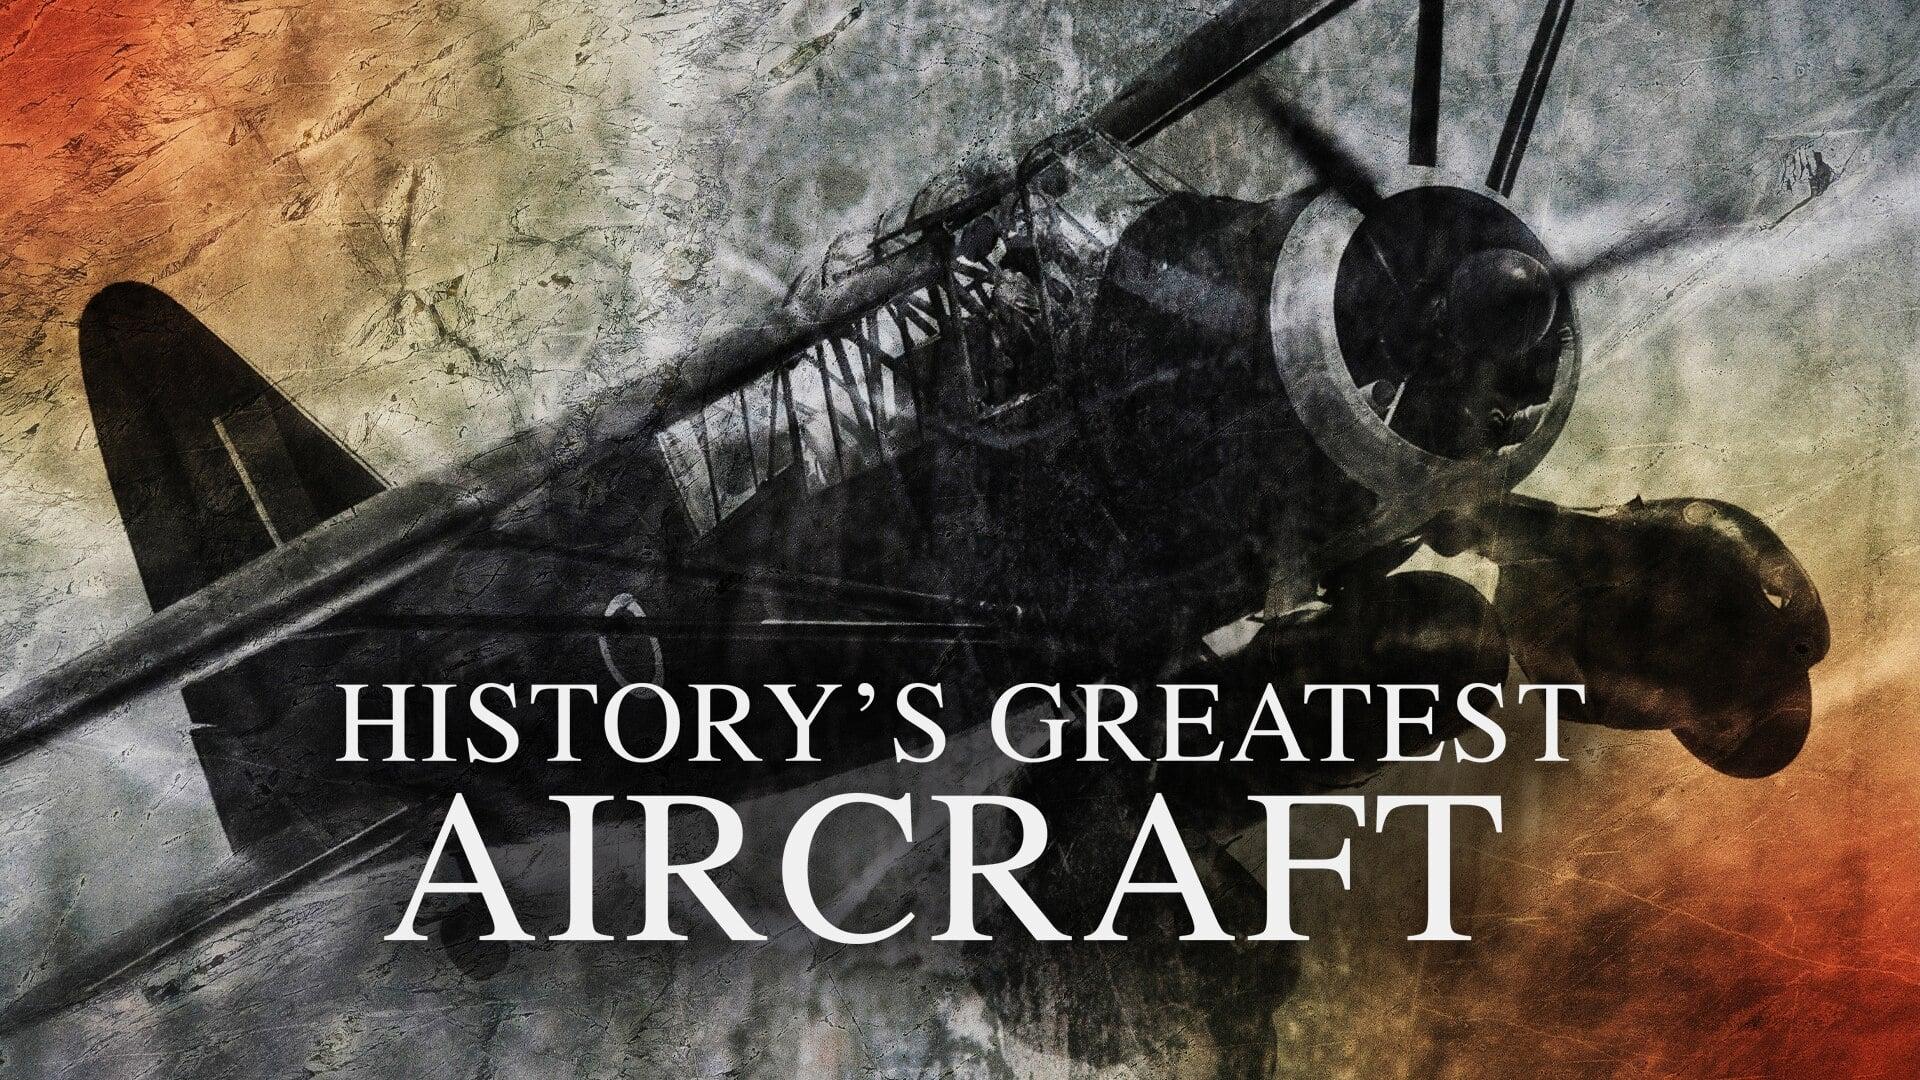 History's Greatest Aircraft backdrop